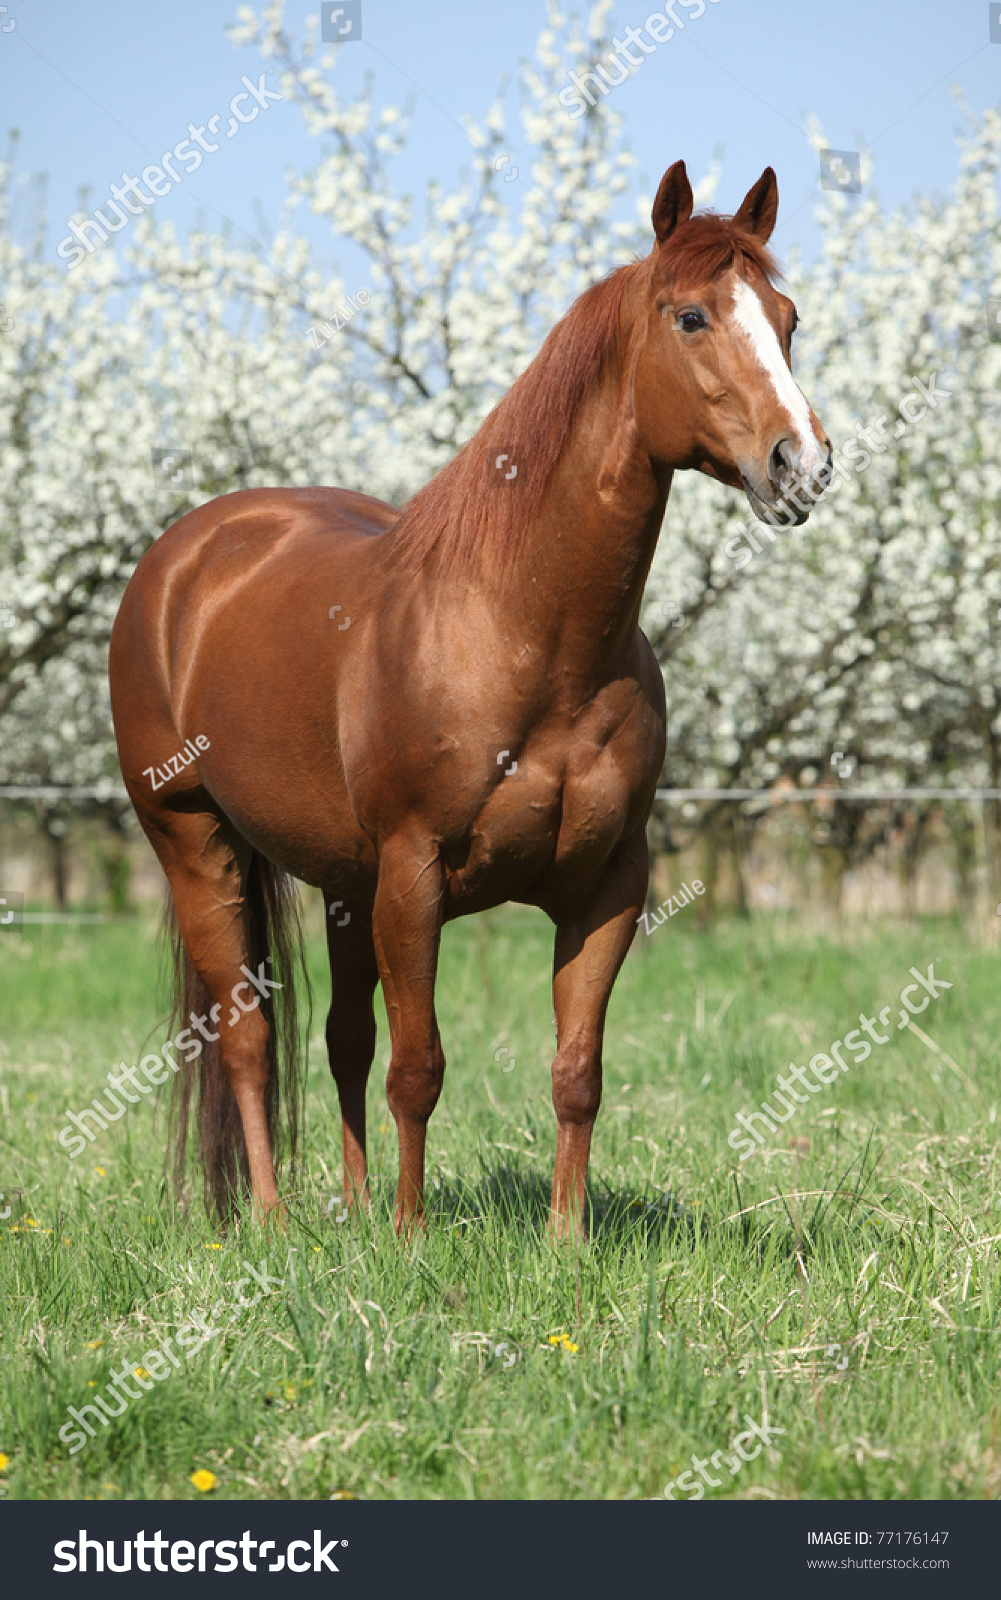 Nice quarter horse in front of flowering plum trees #77176147